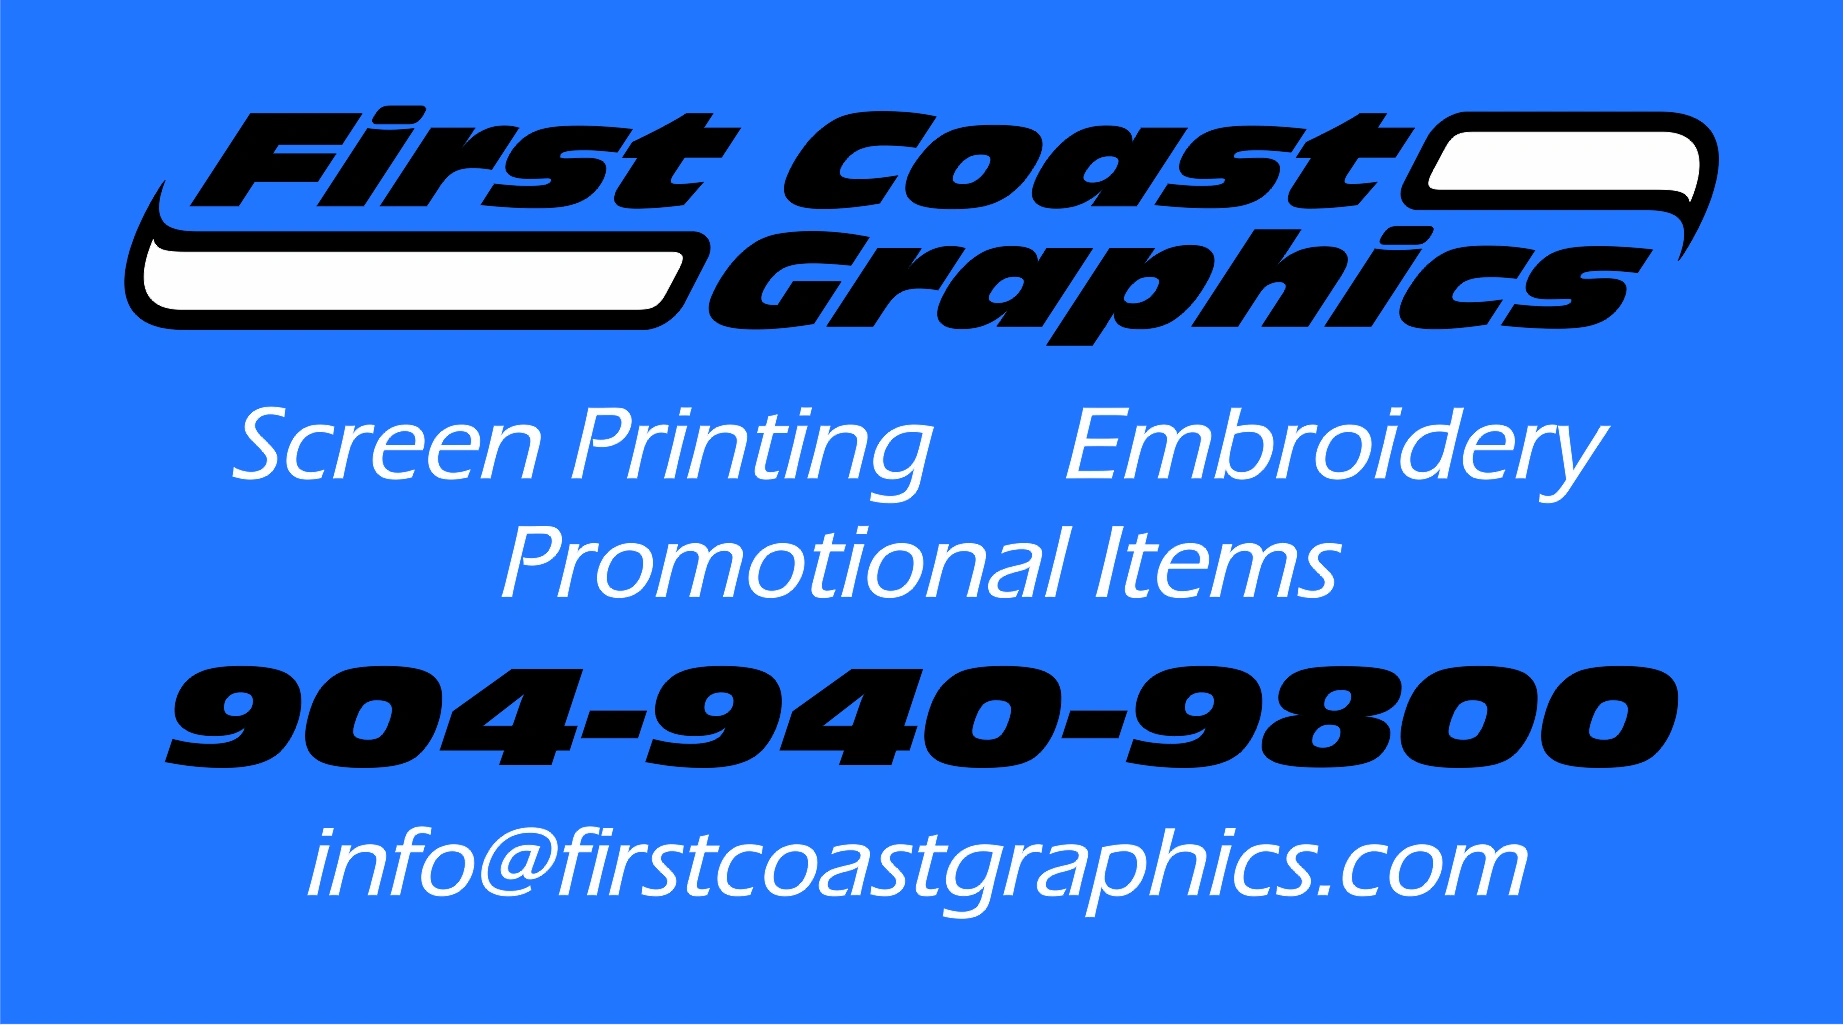 First Coast Graphics Inc